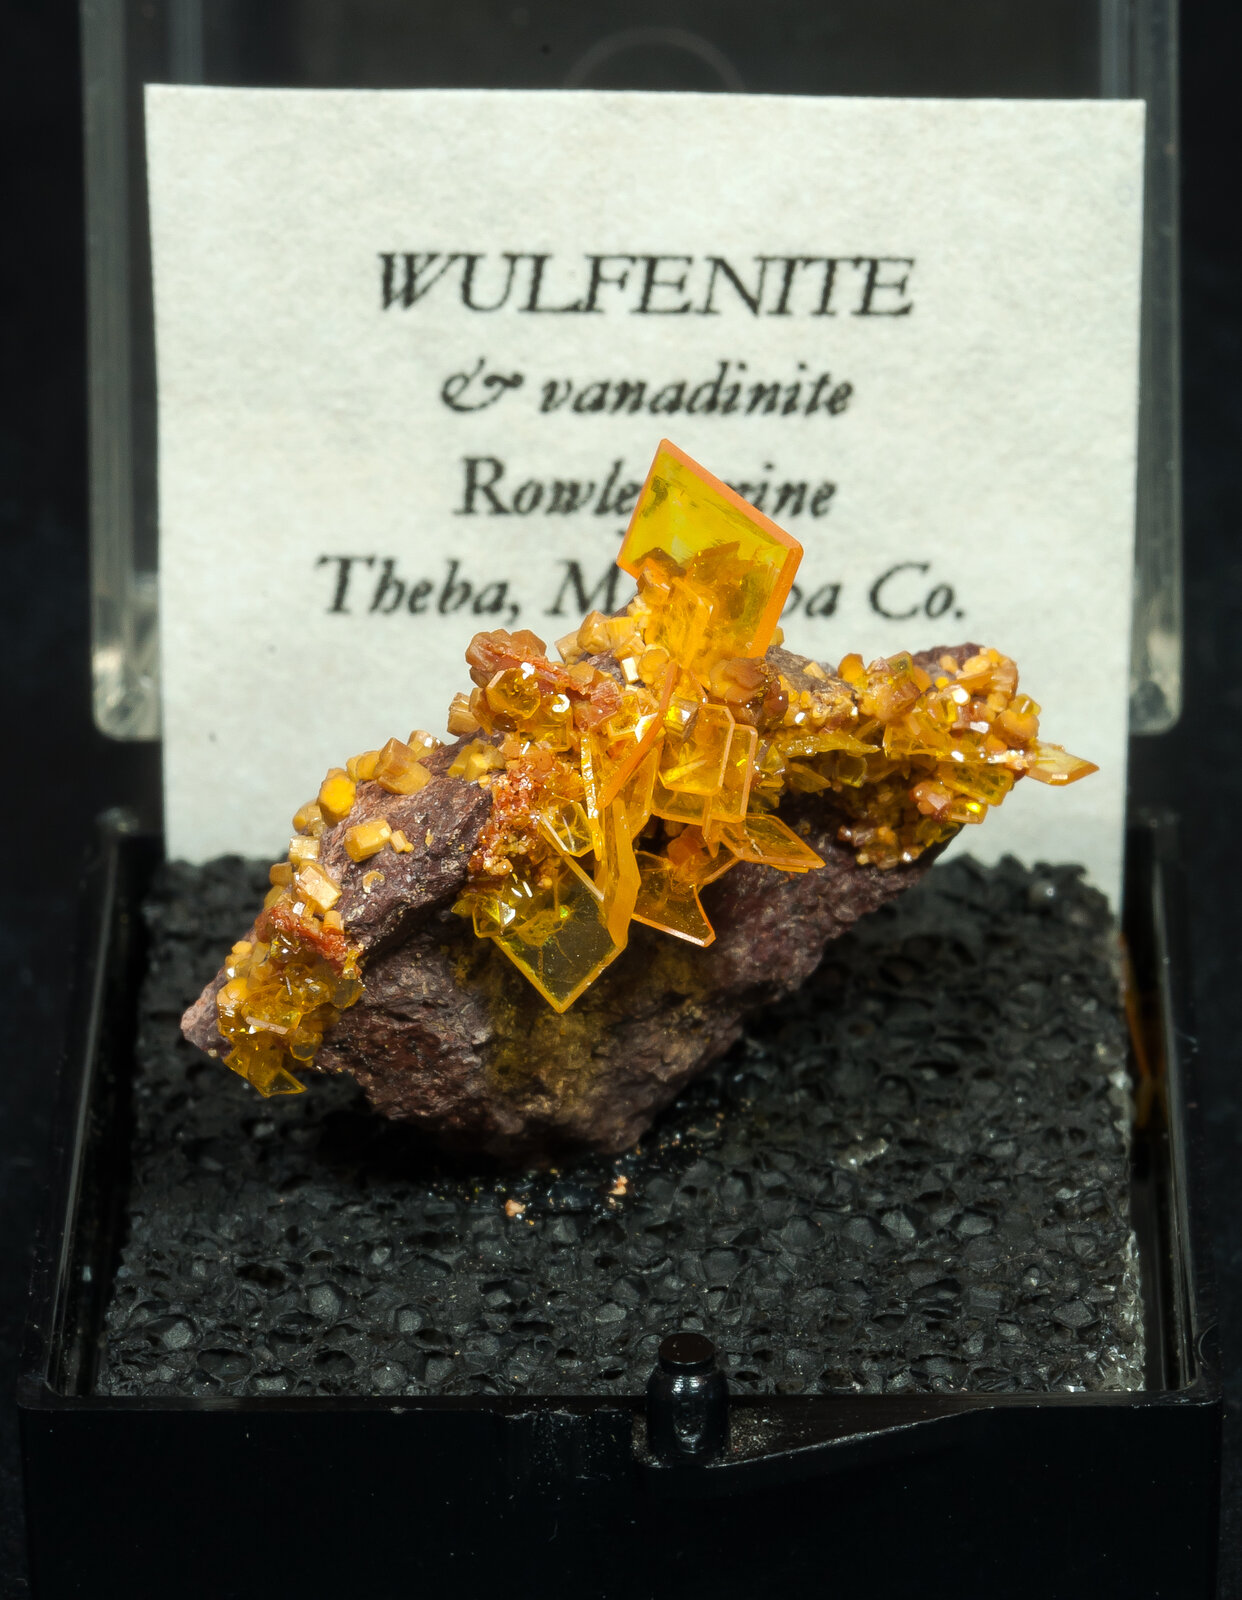 specimens/s_imagesAN4/Wulfenite-TRA62AN4f1.jpg